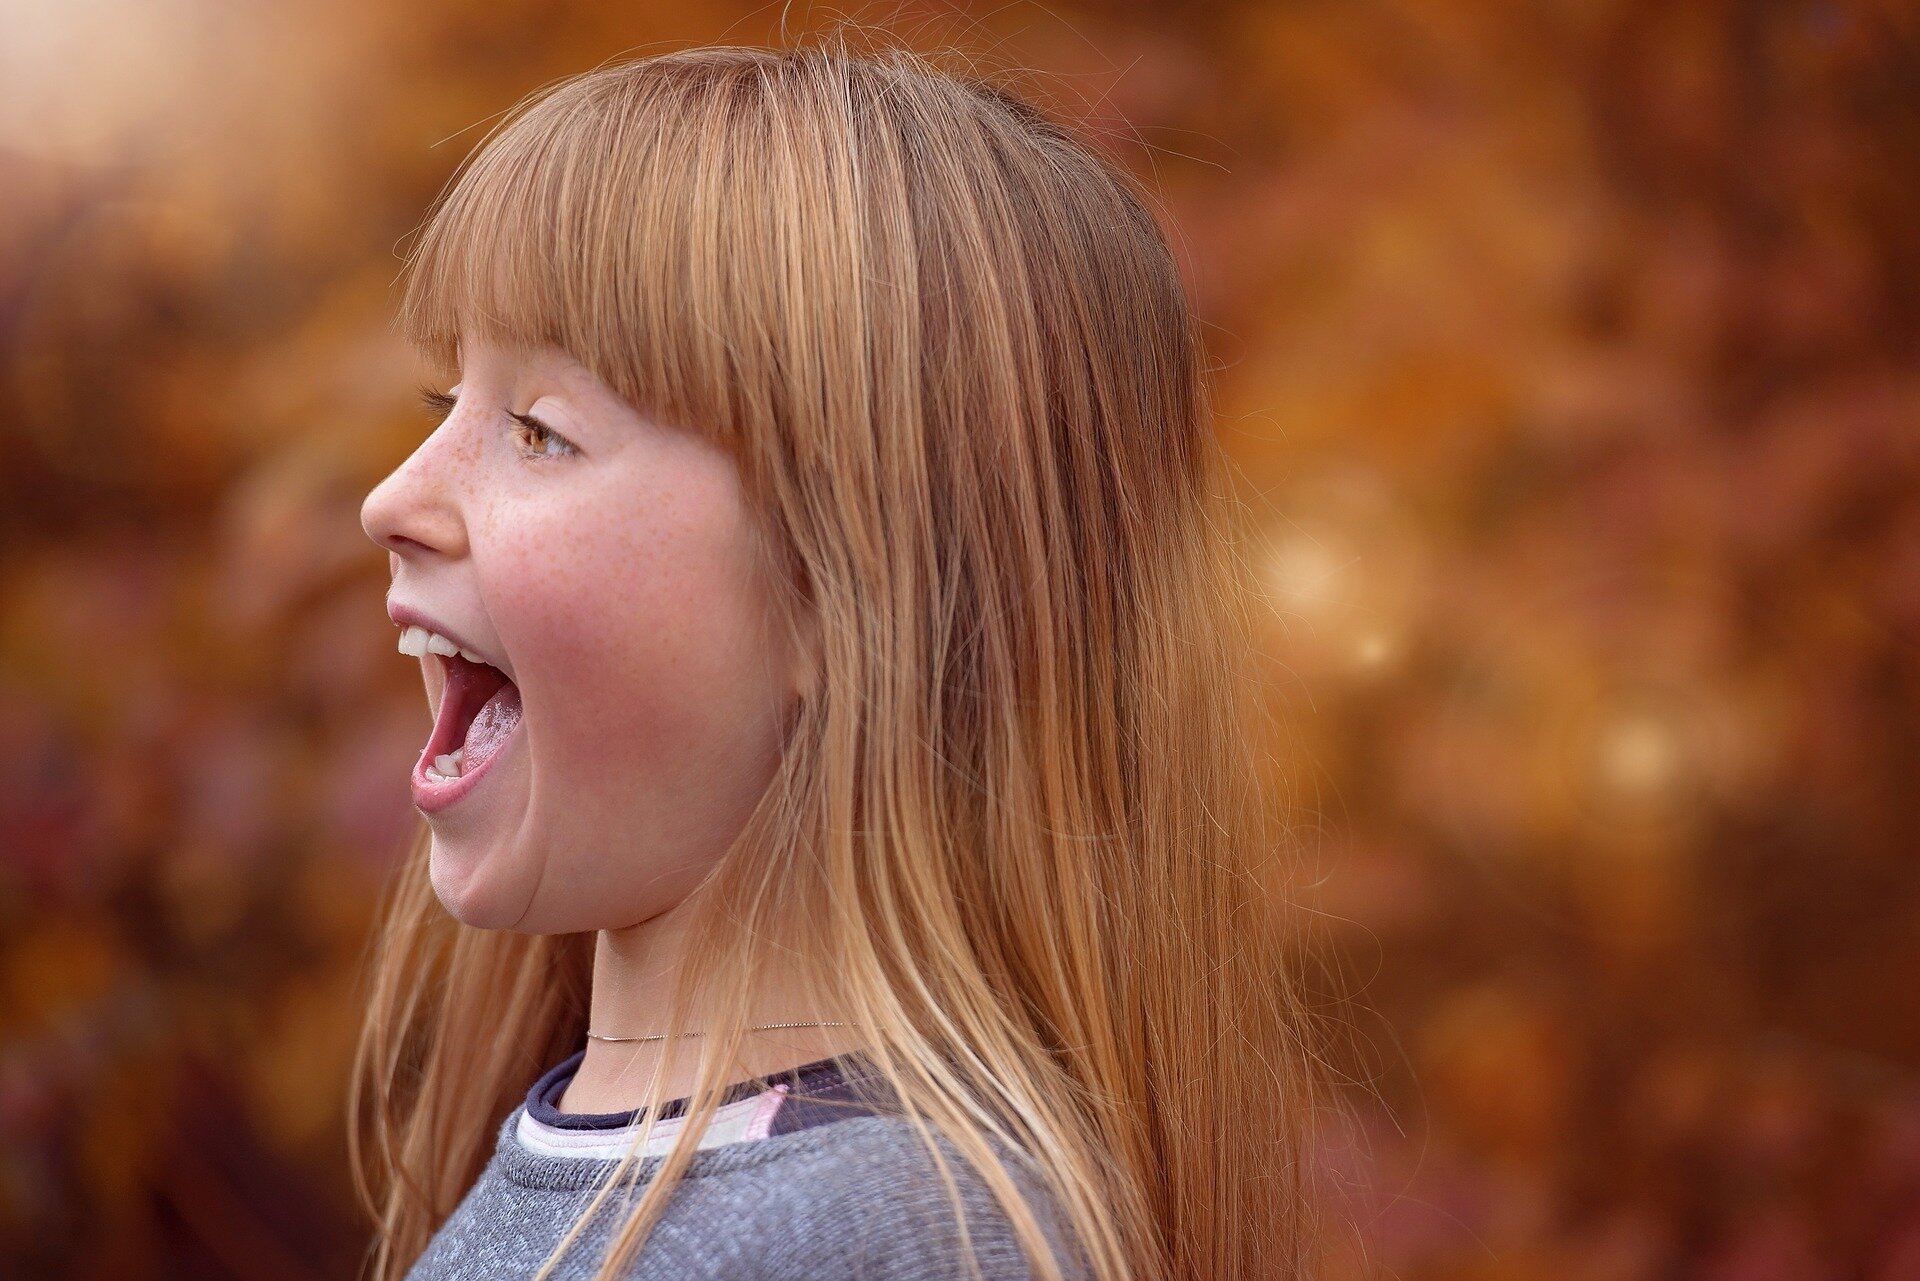 Human screams communicate at least six emotions